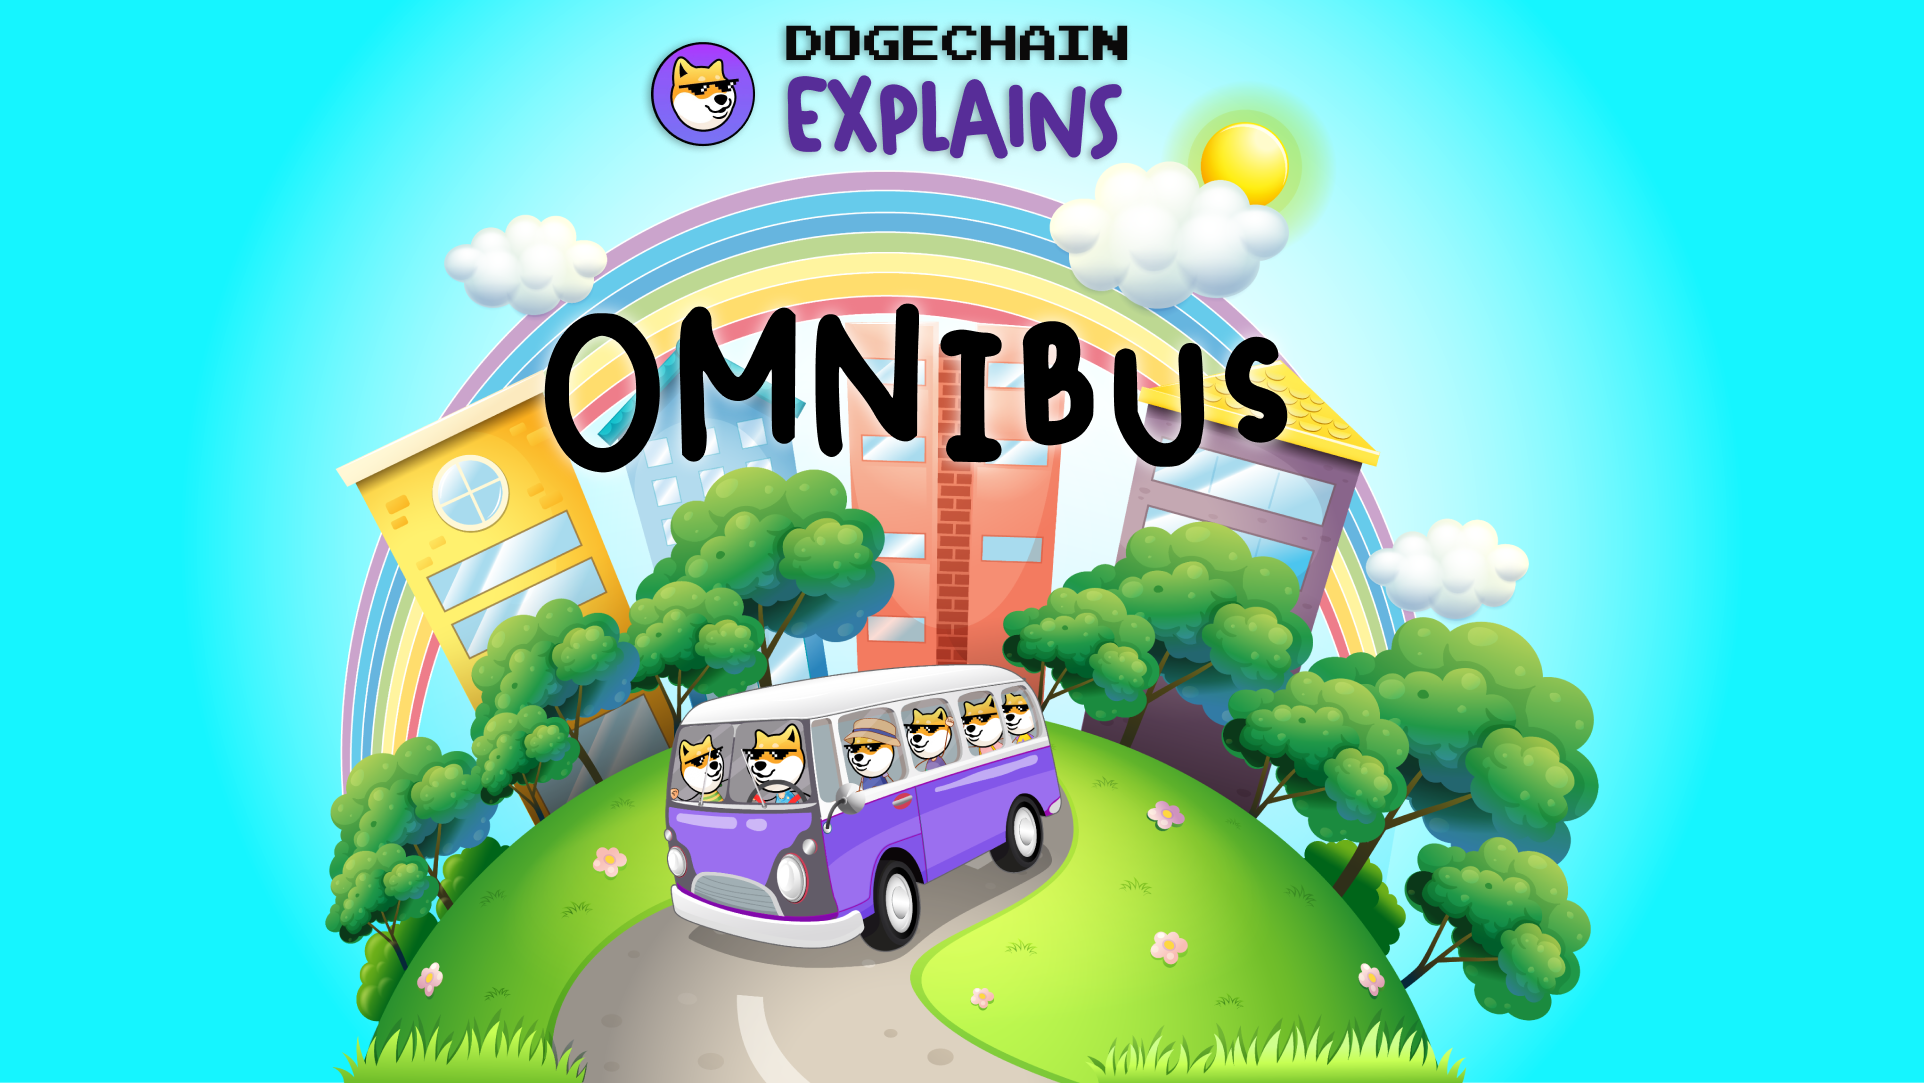 The Dogechain Knowledge Omnibus